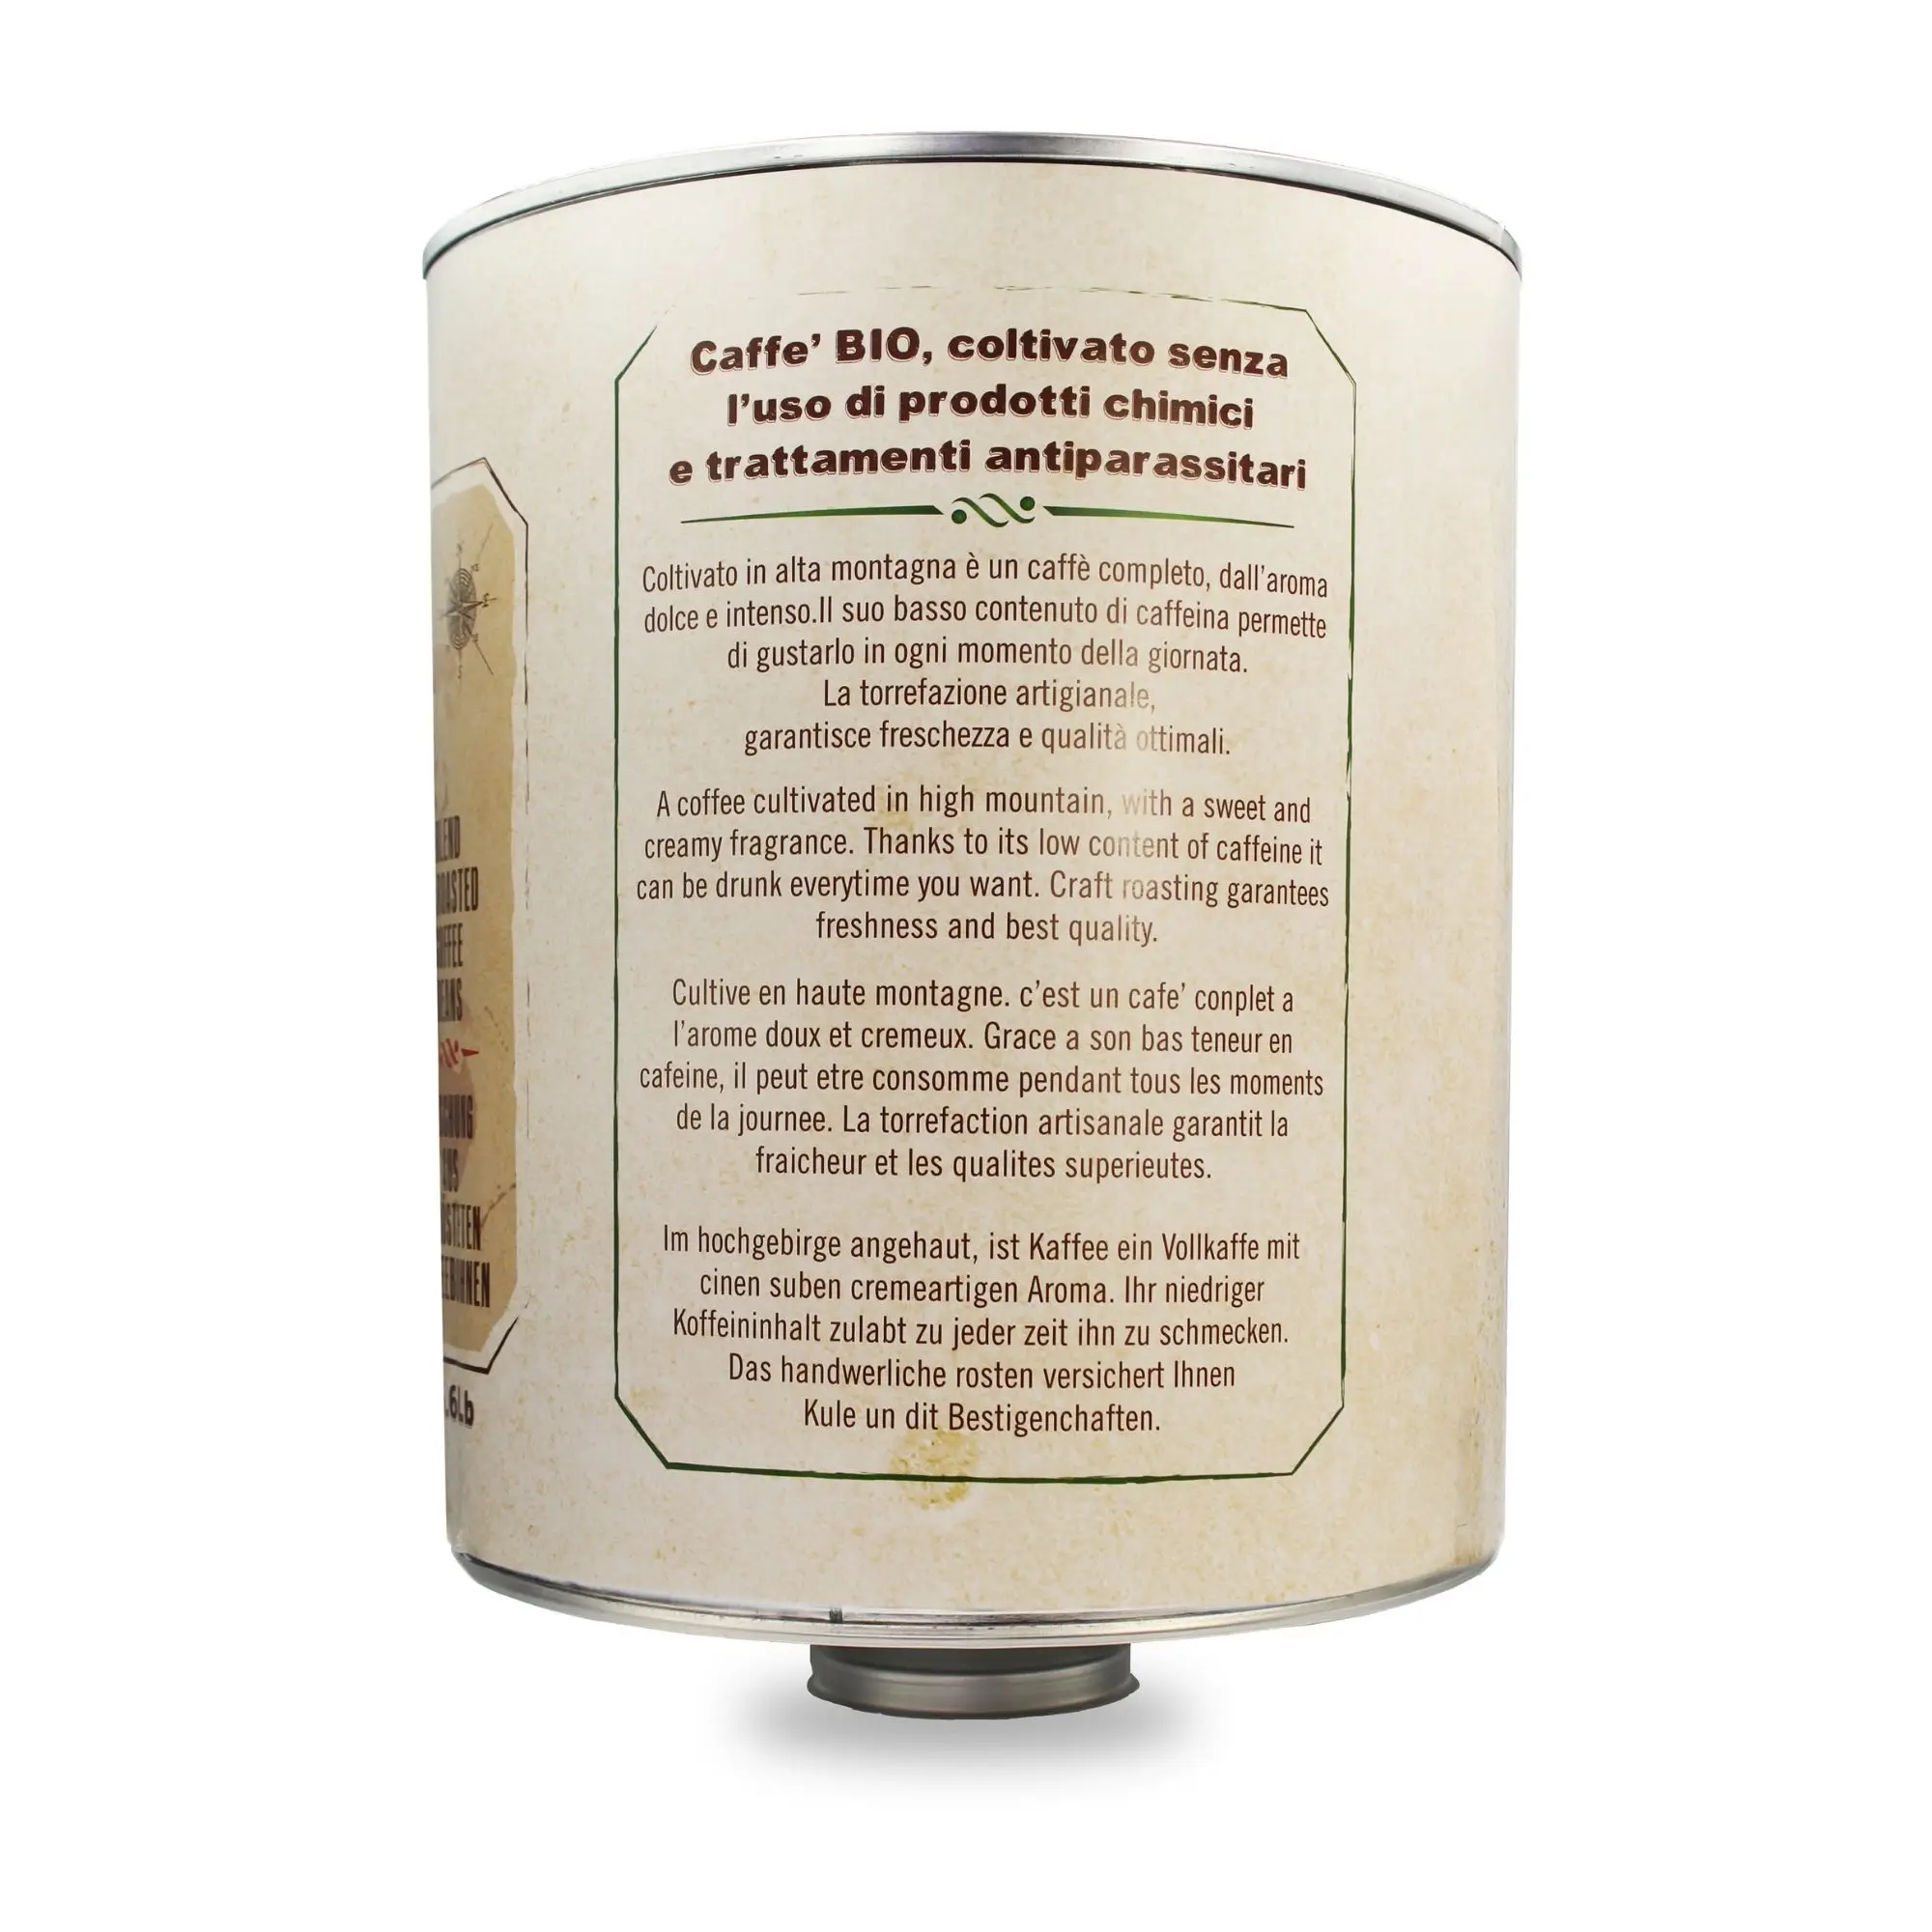 Organic, Vegan and Gluten Free Coffee Beans Caffe Europa 80% Arabica - 20% Robusta Blend Delicate Taste 3Kg Tin